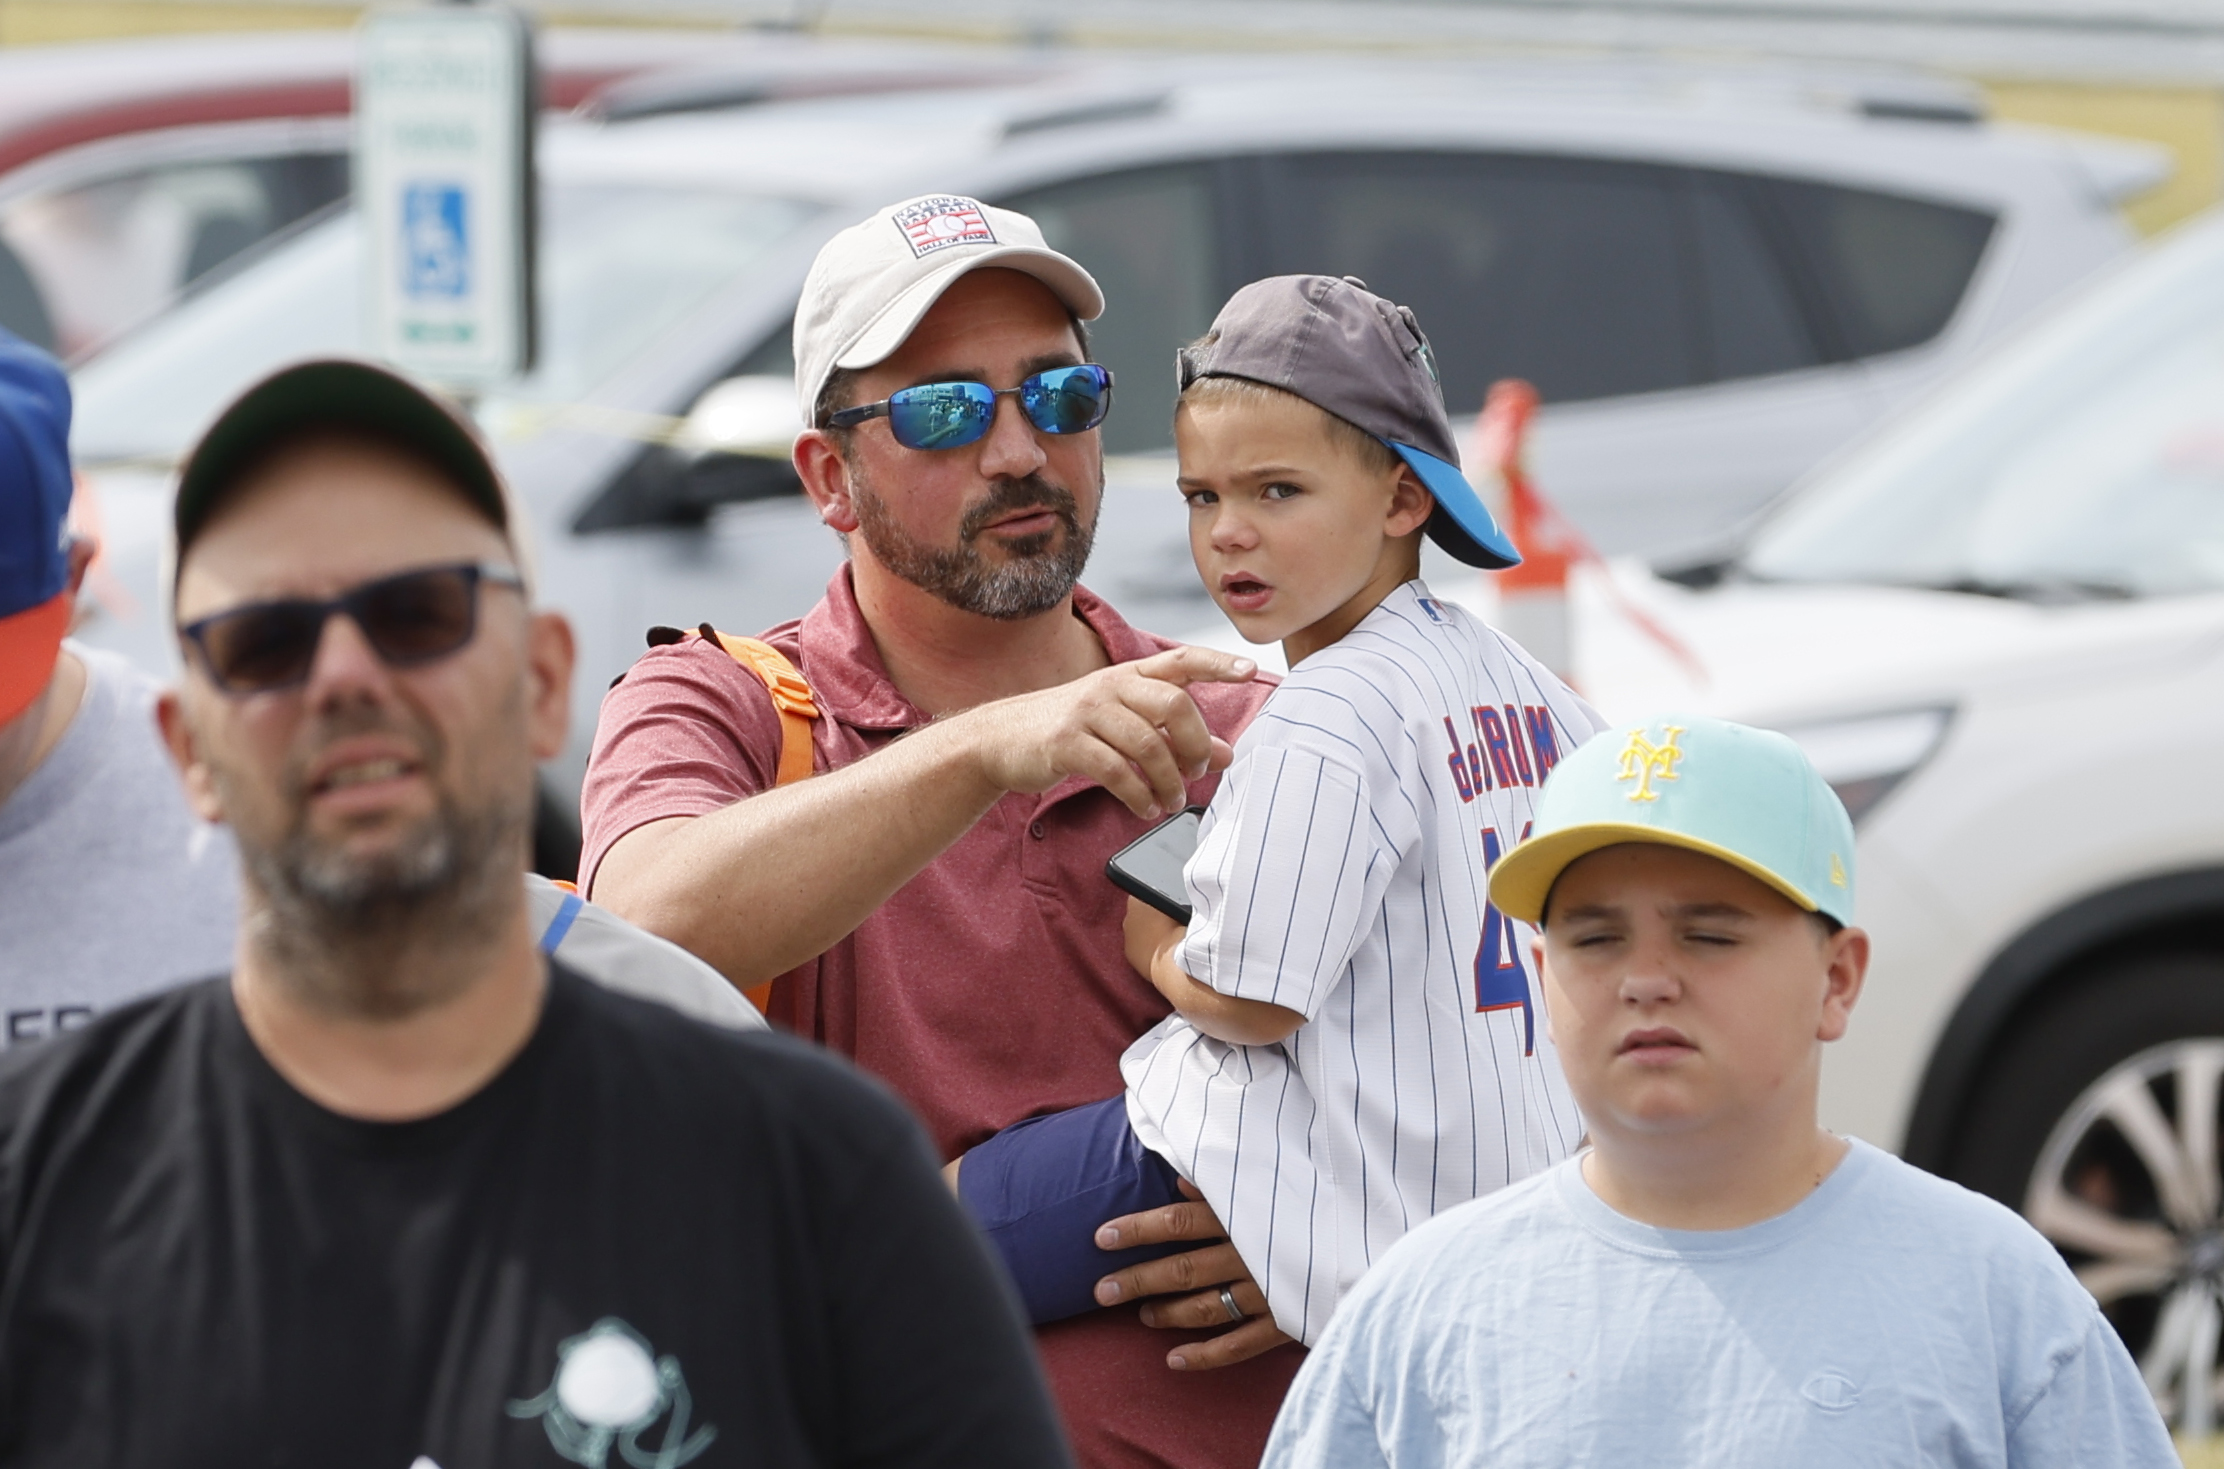 Syracuse Mets annual garage sale helps make memories for baseball